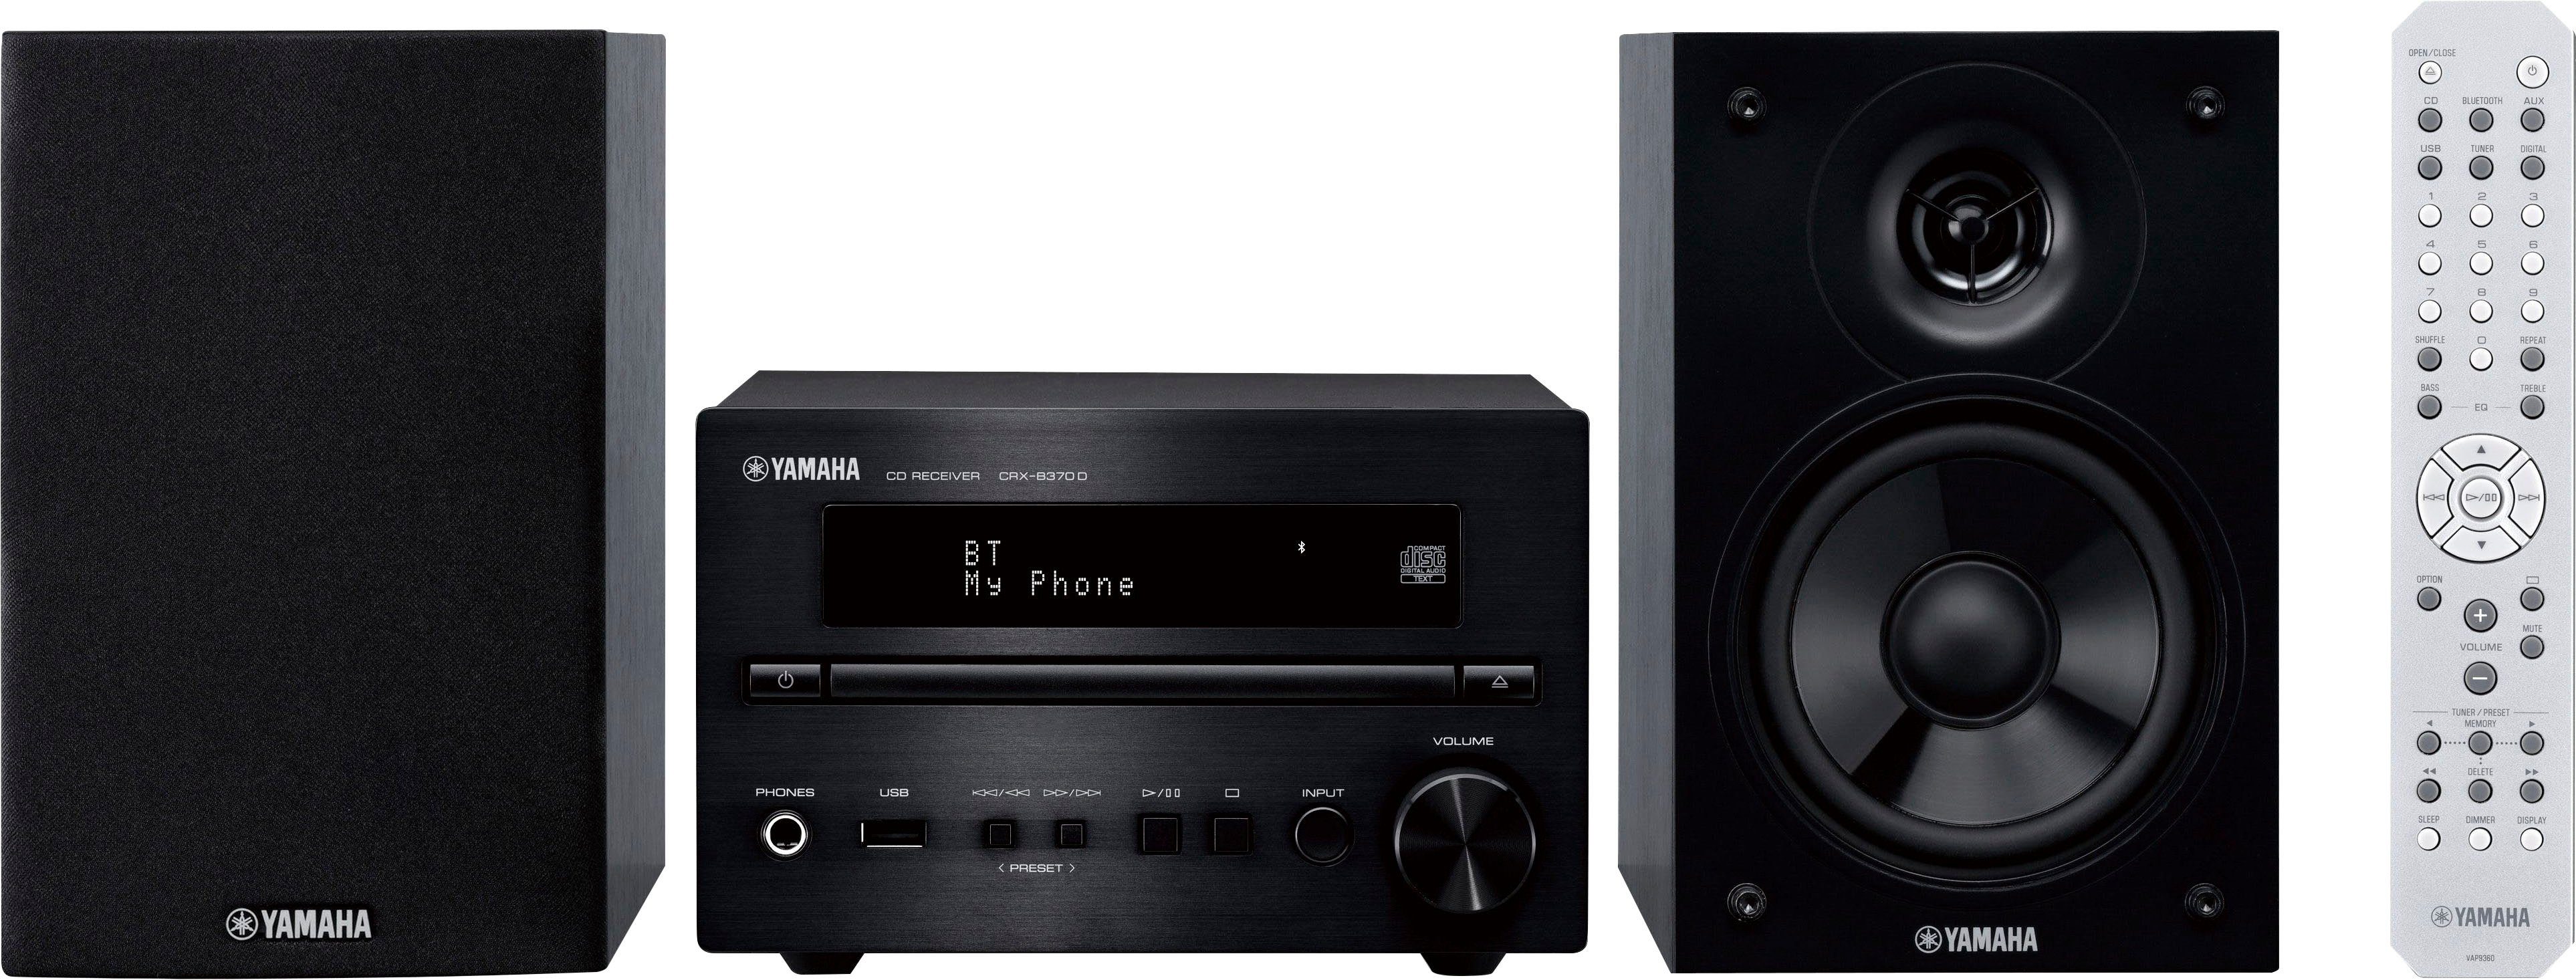 MCR-B270D schwarz Yamaha FM-Tuner, 40 Digitalradio W) (DAB) (DAB), (Digitalradio